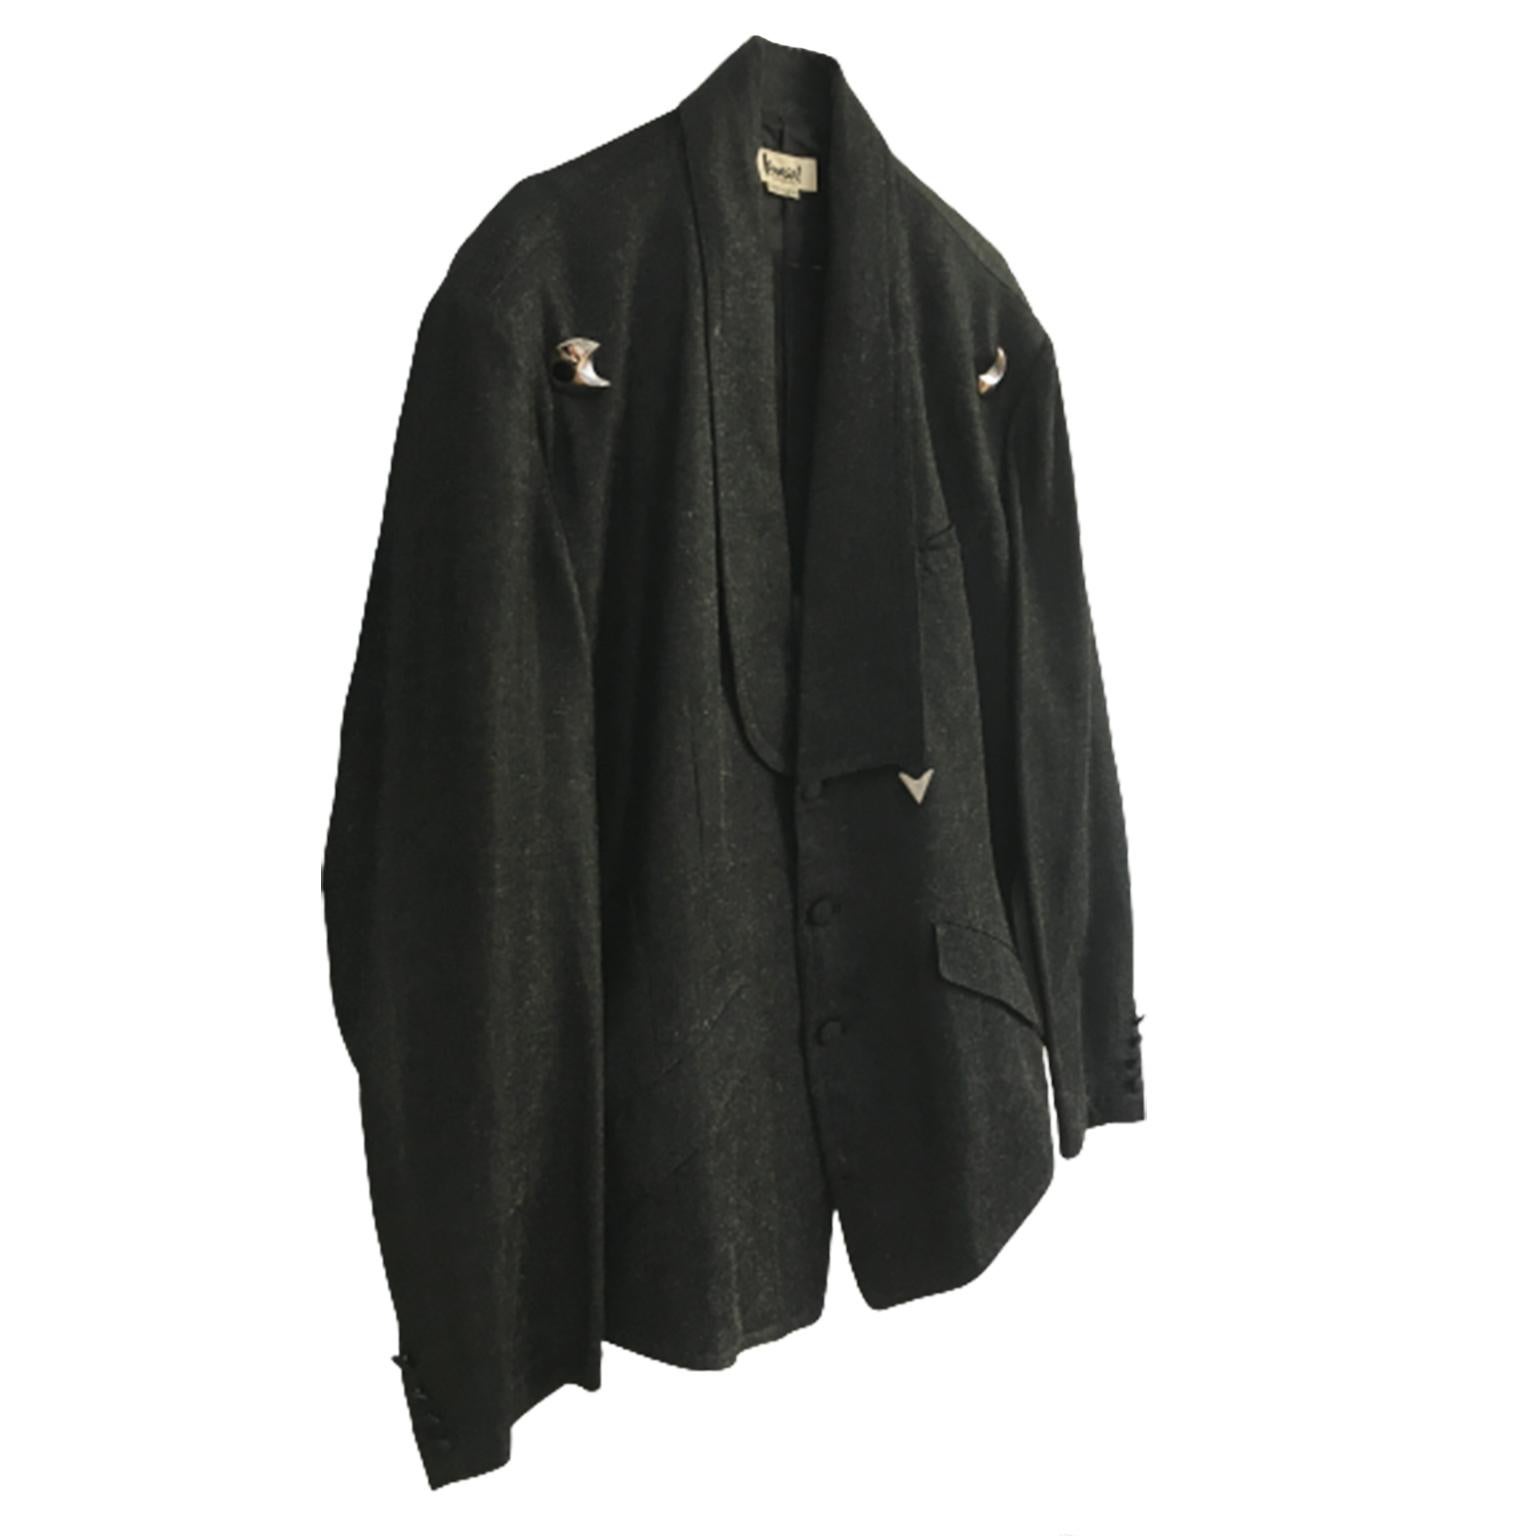 Kansai Yamamoto Dark Grey Jacket Pantsuit Circa Mid 80s In Good Condition For Sale In Berlin, DE